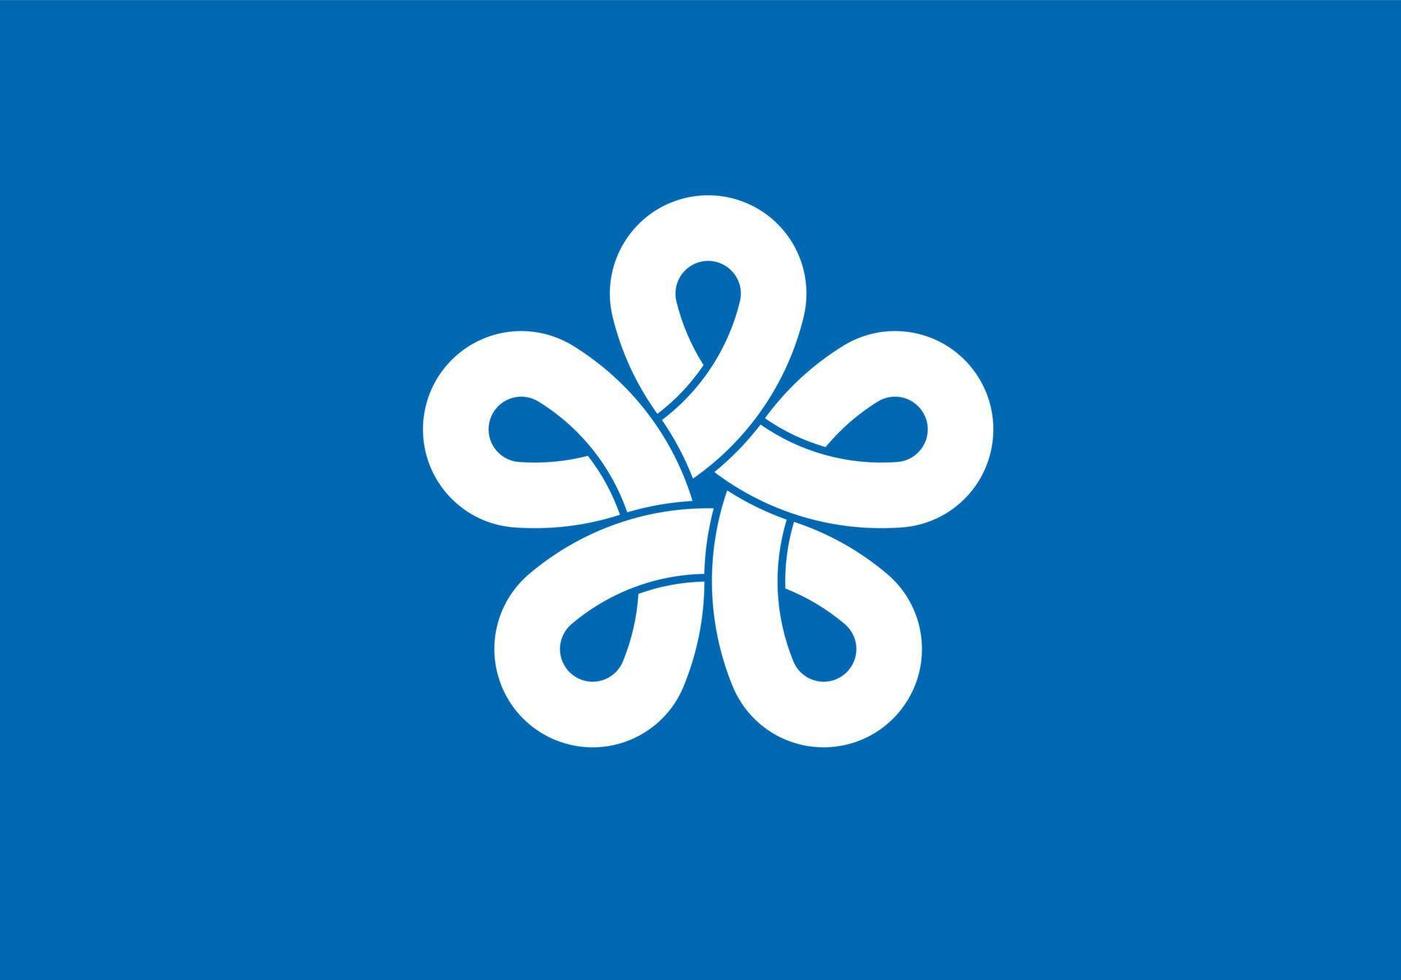 fukuoka vlag, Japan prefectuur. vector illustratie